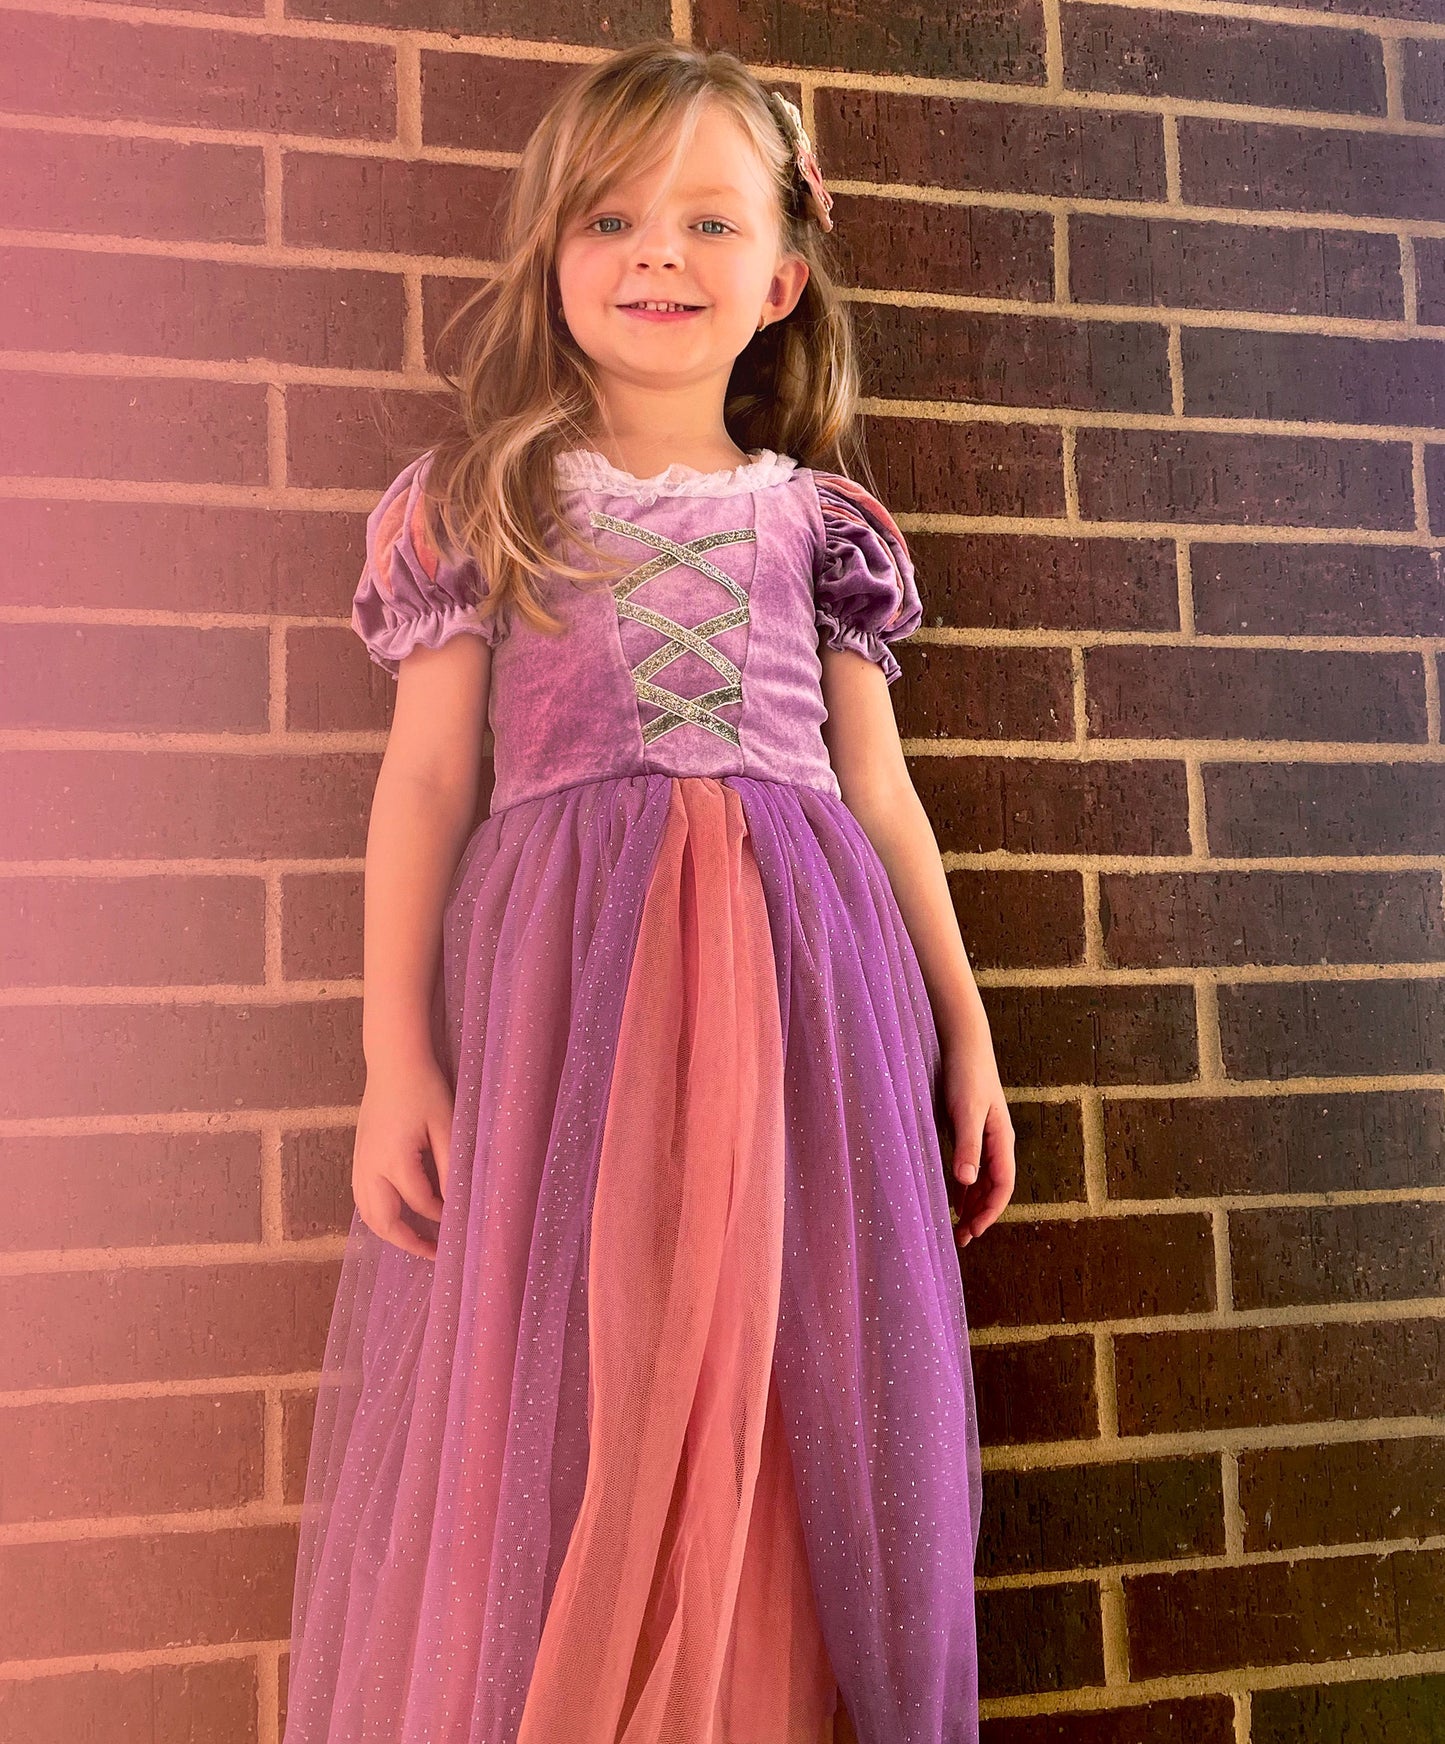 Joy - Tower Princess Purple Costume Dress